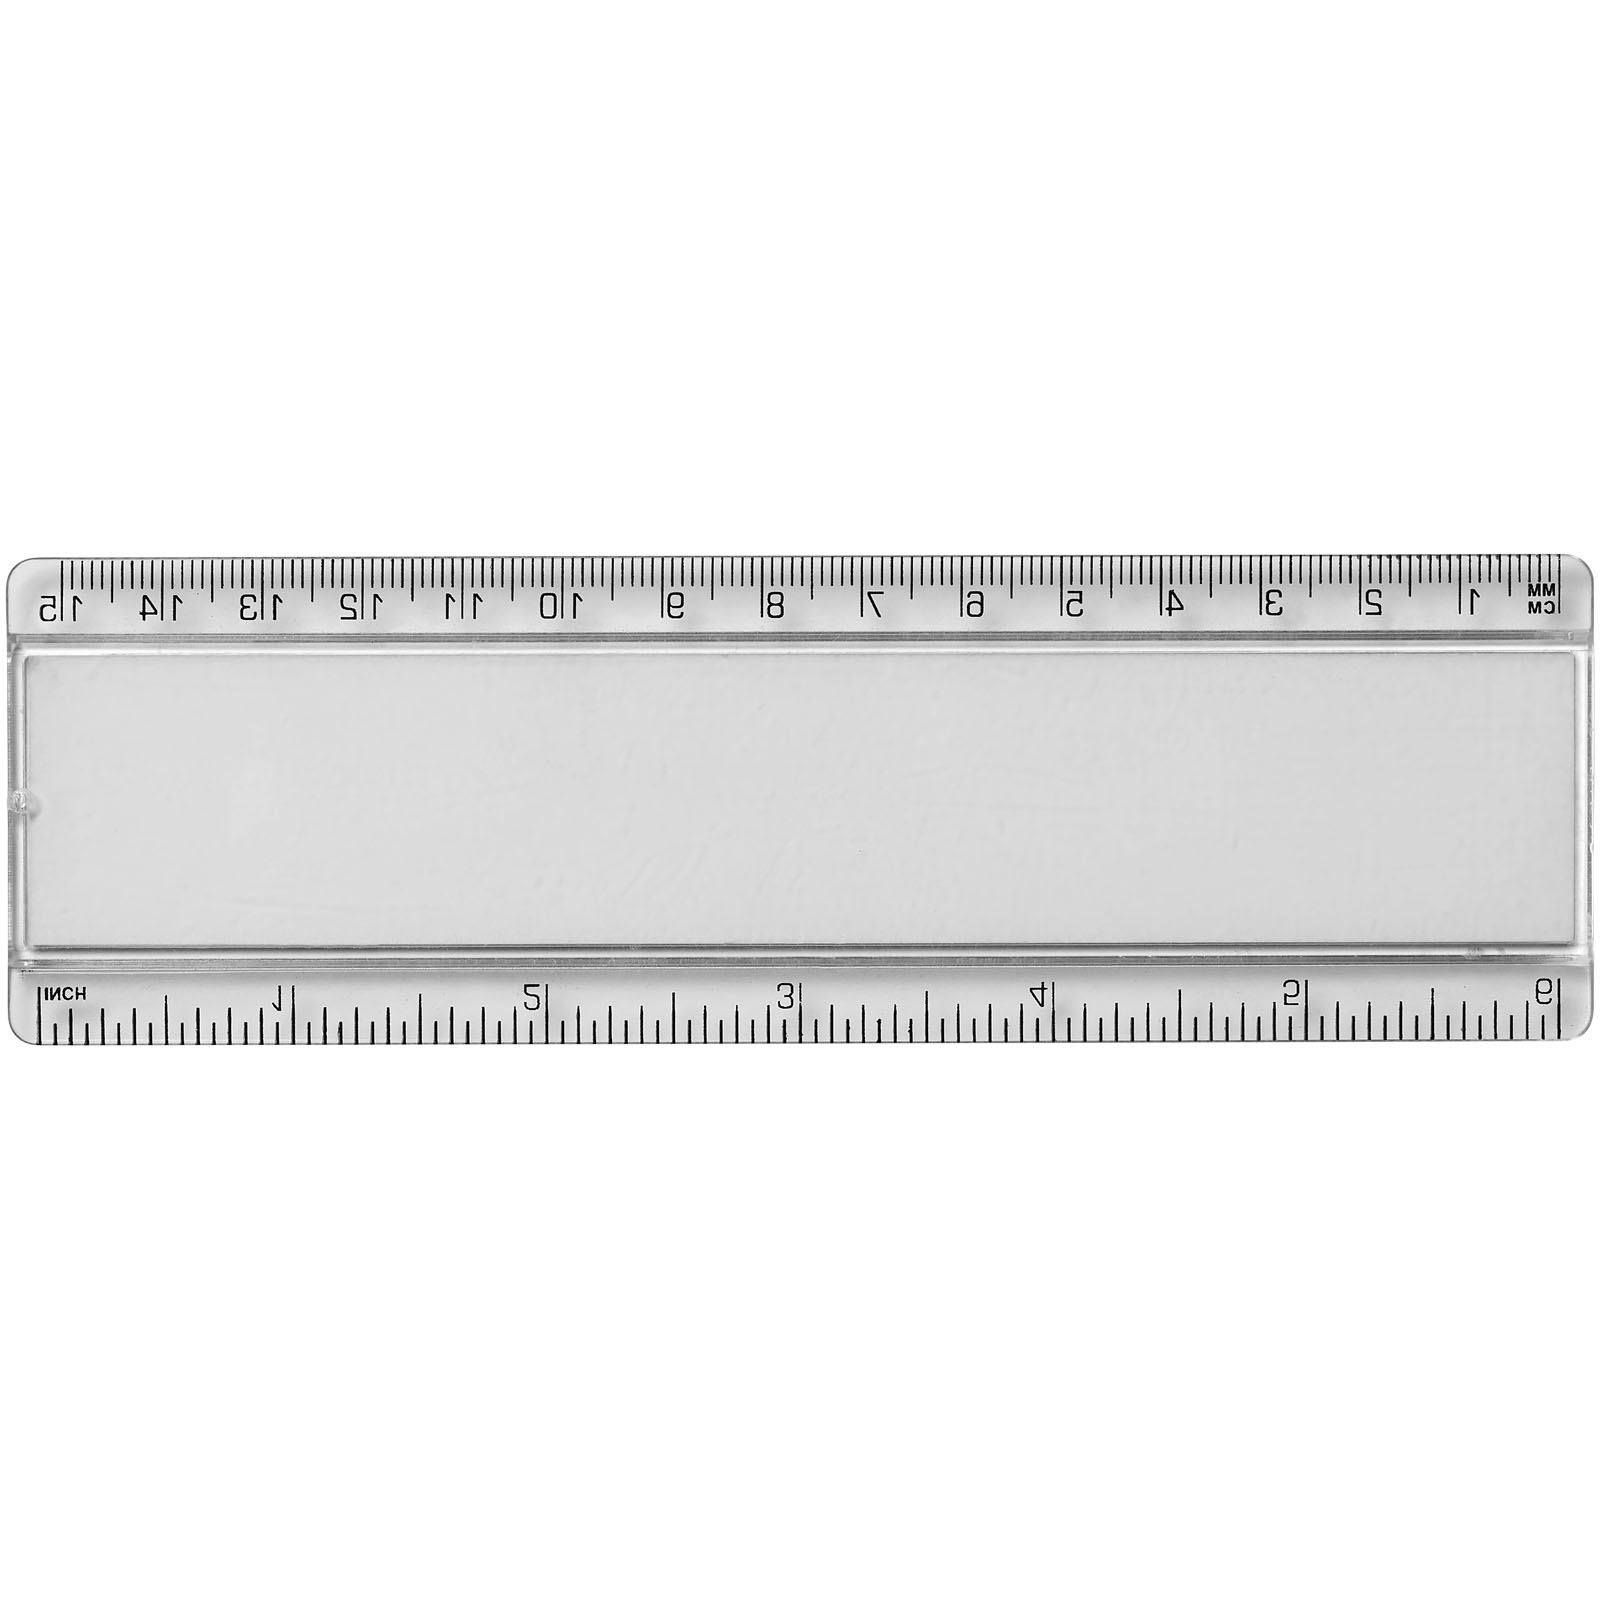 Advertising Desk Accessories - Ellison 15 cm plastic insert ruler - 2